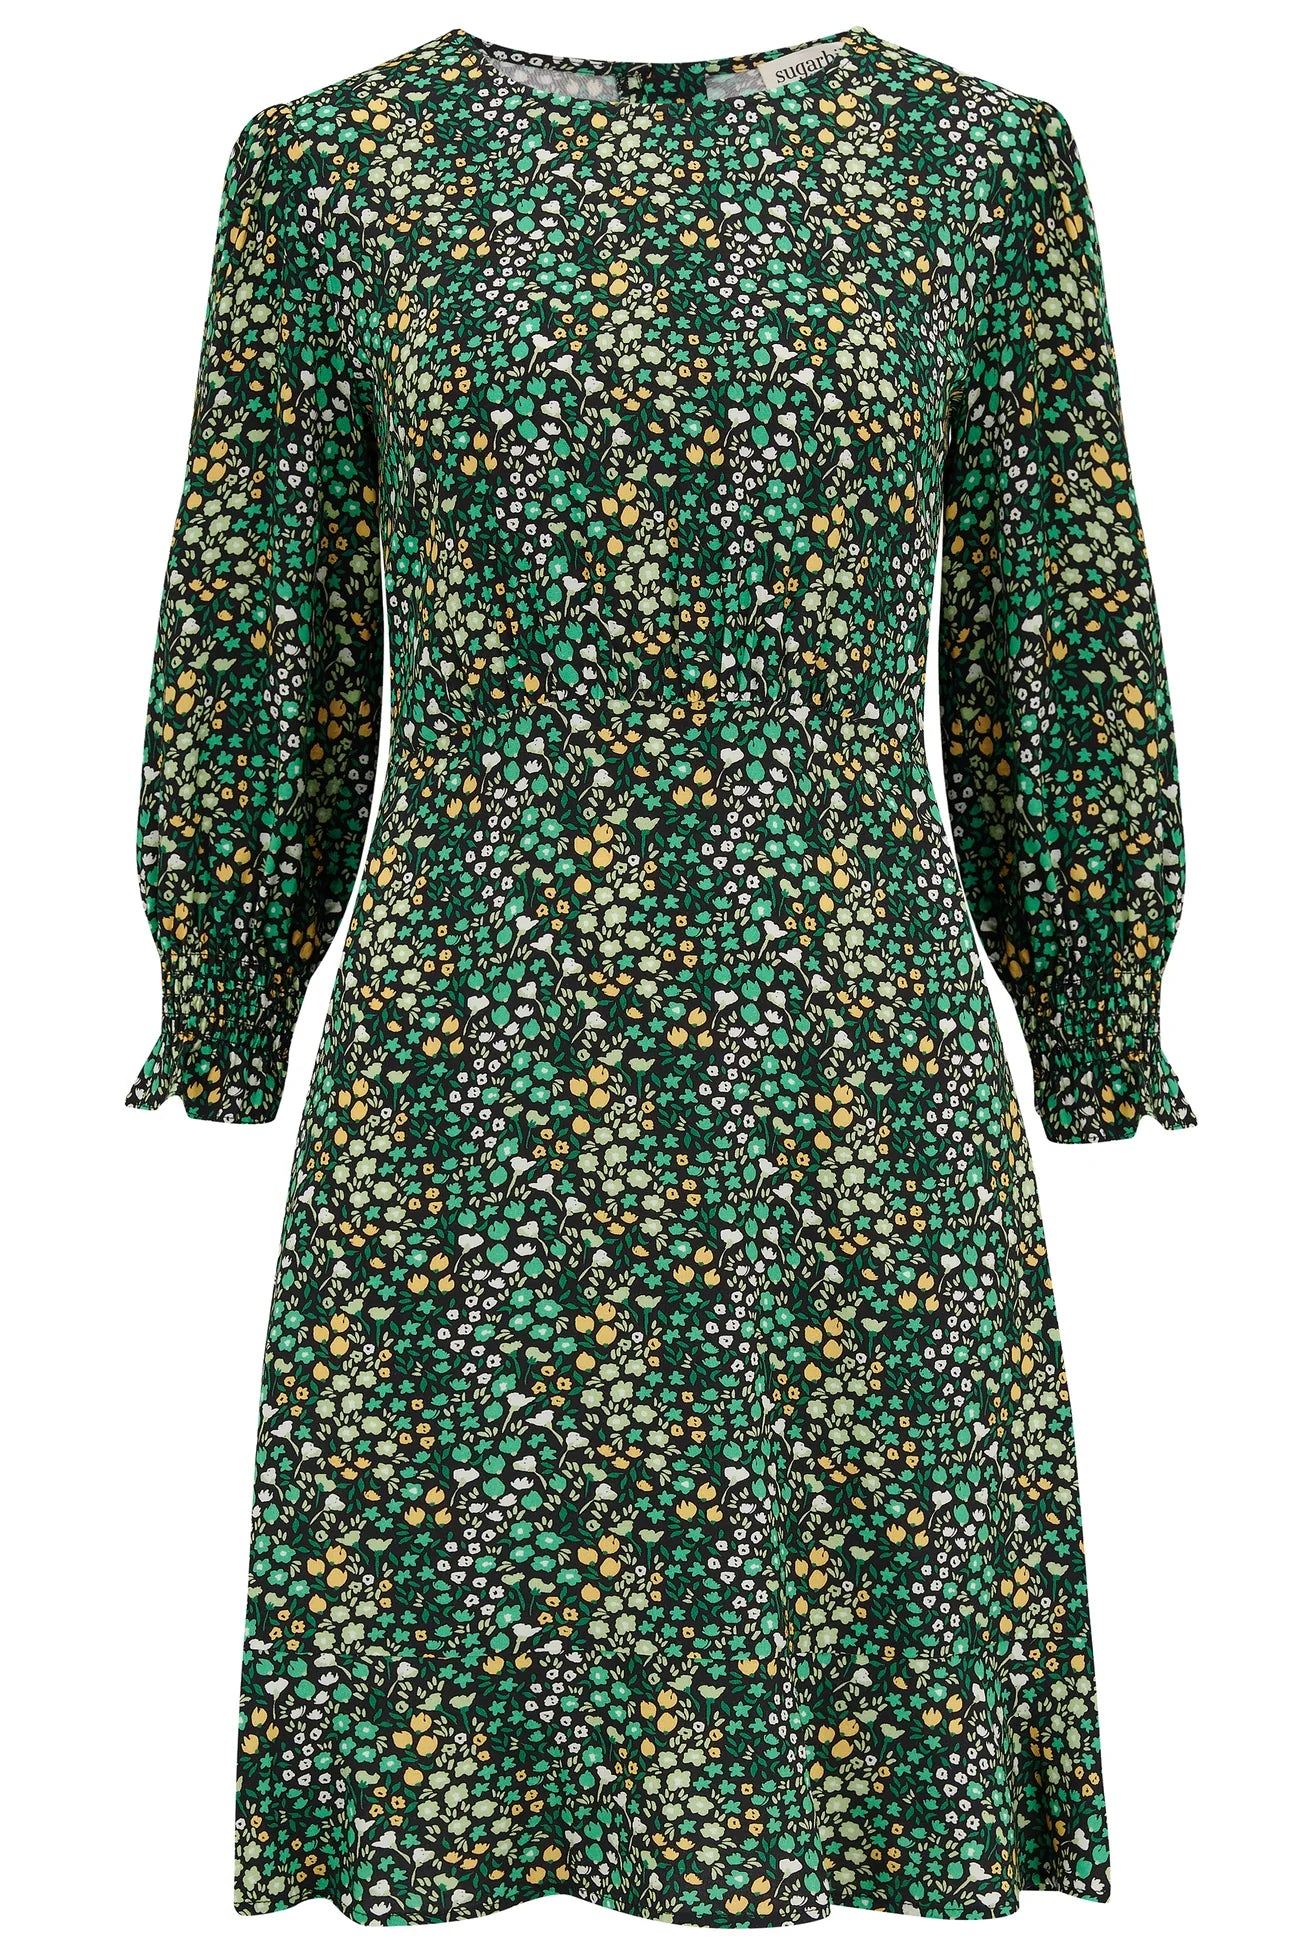 SUGARHILL BRIGHTON-Lorelei Dress - Black/Green, Ditsy Floral